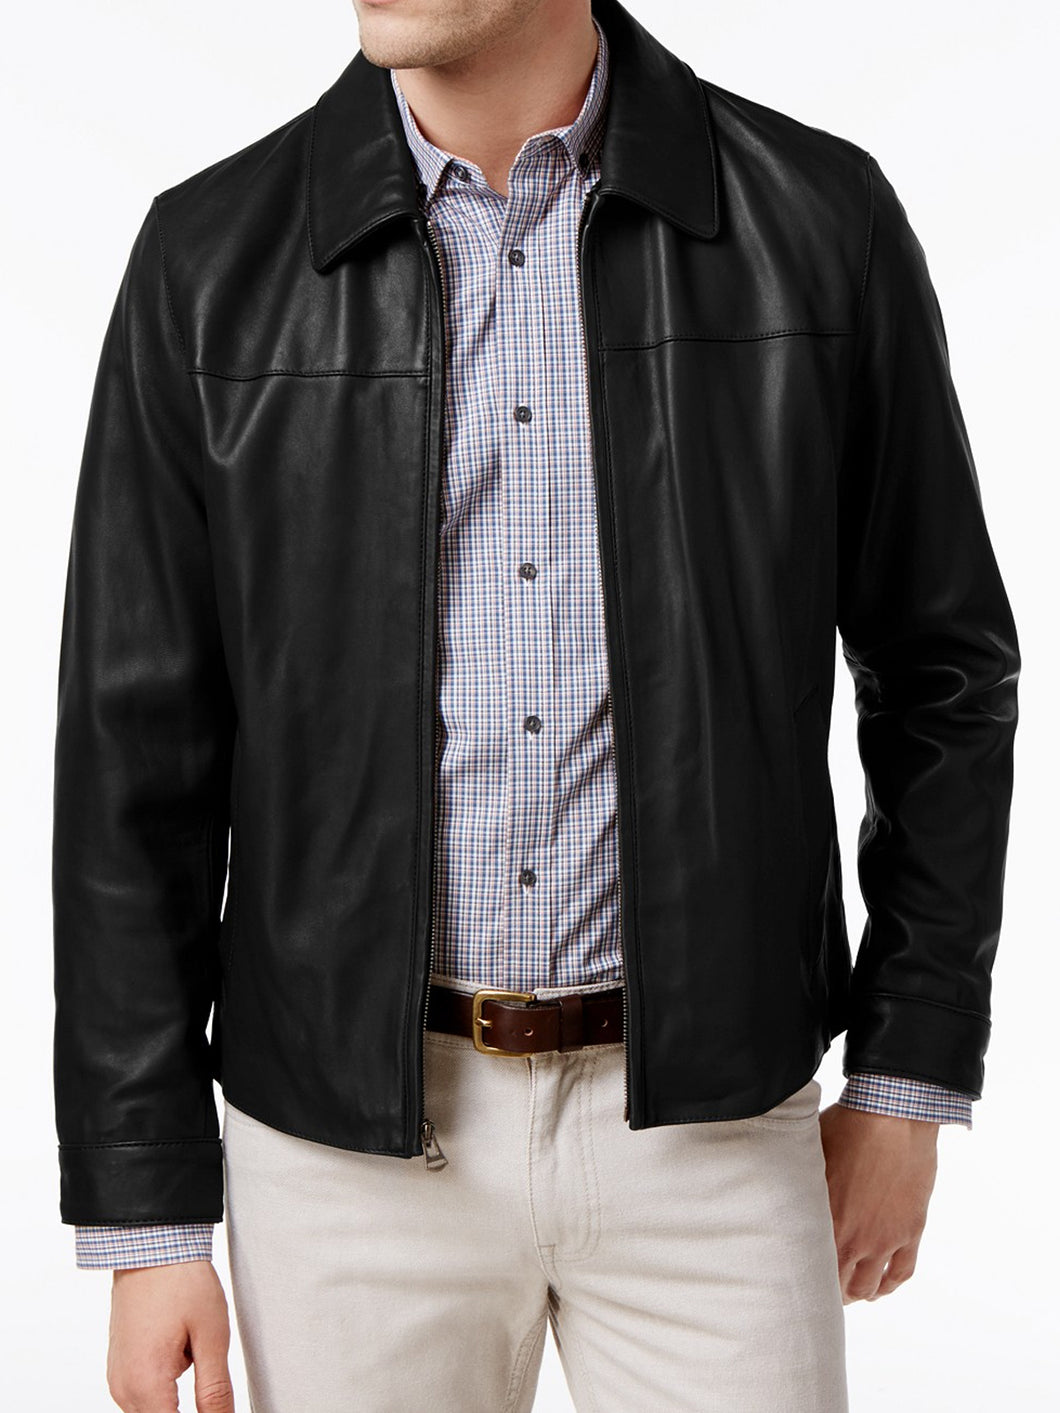 Men's Dark Black Biker Leather Jacket